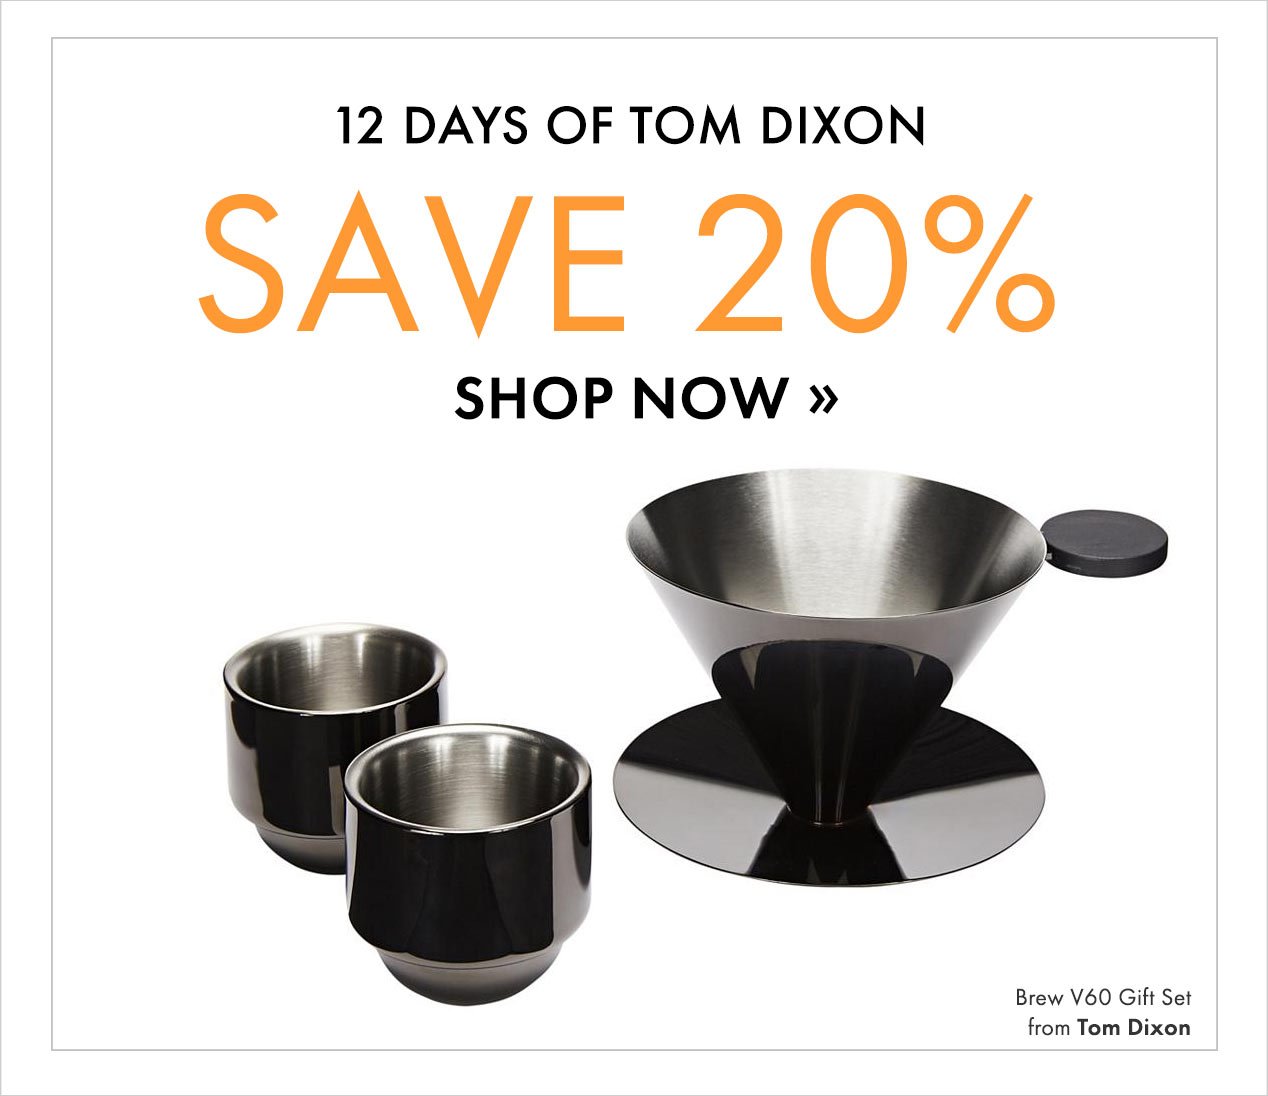 12 Days of Tom Dixon Save 20%. Shop Now.